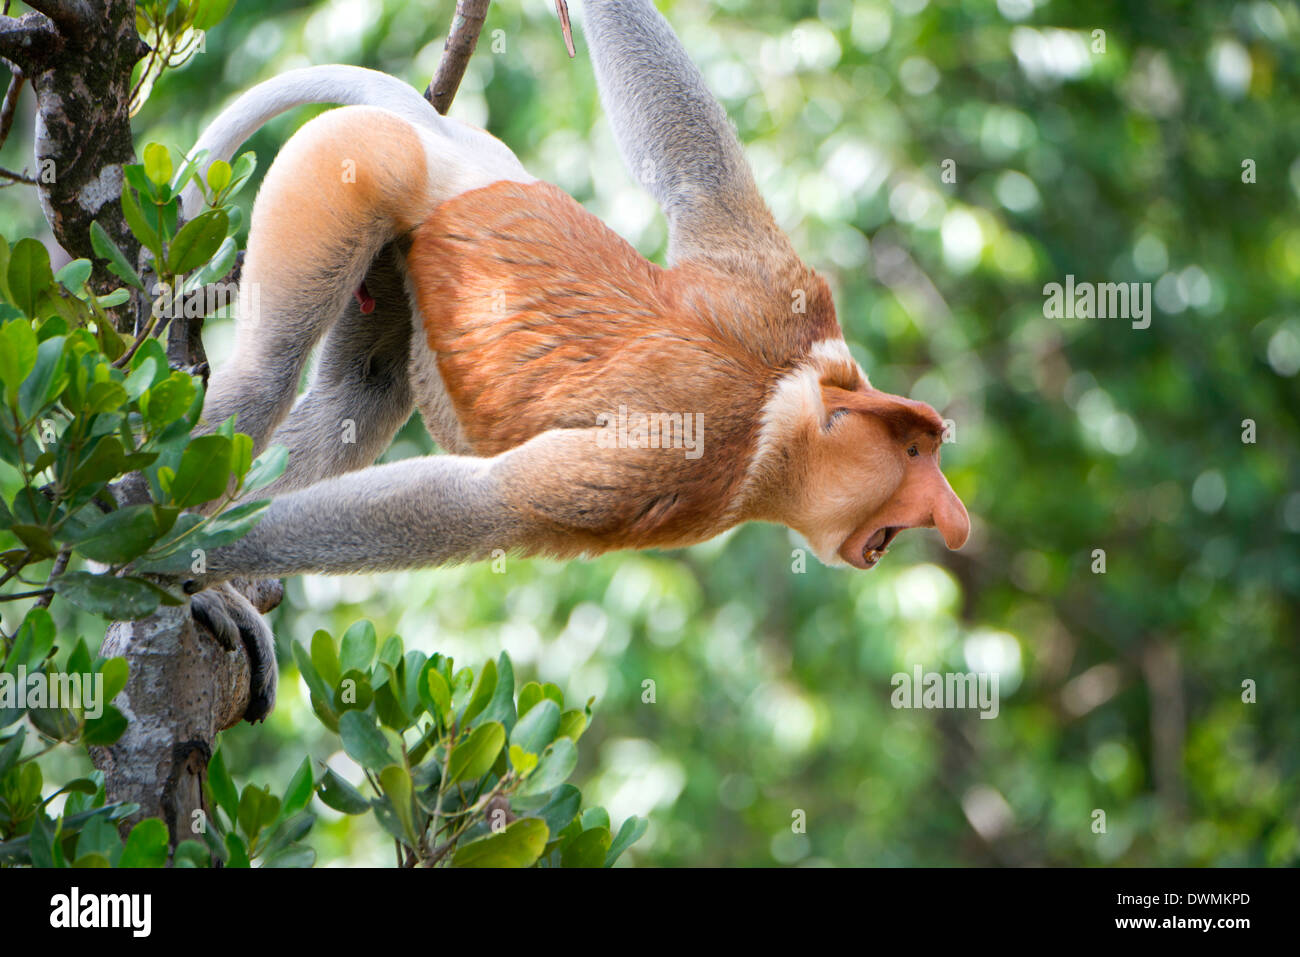 Maschio dominante proboscide di scimmia (Nasalis larvatus), Labuk Bay proboscide Monkey Santuario, Sabah Borneo, Malaysia Foto Stock